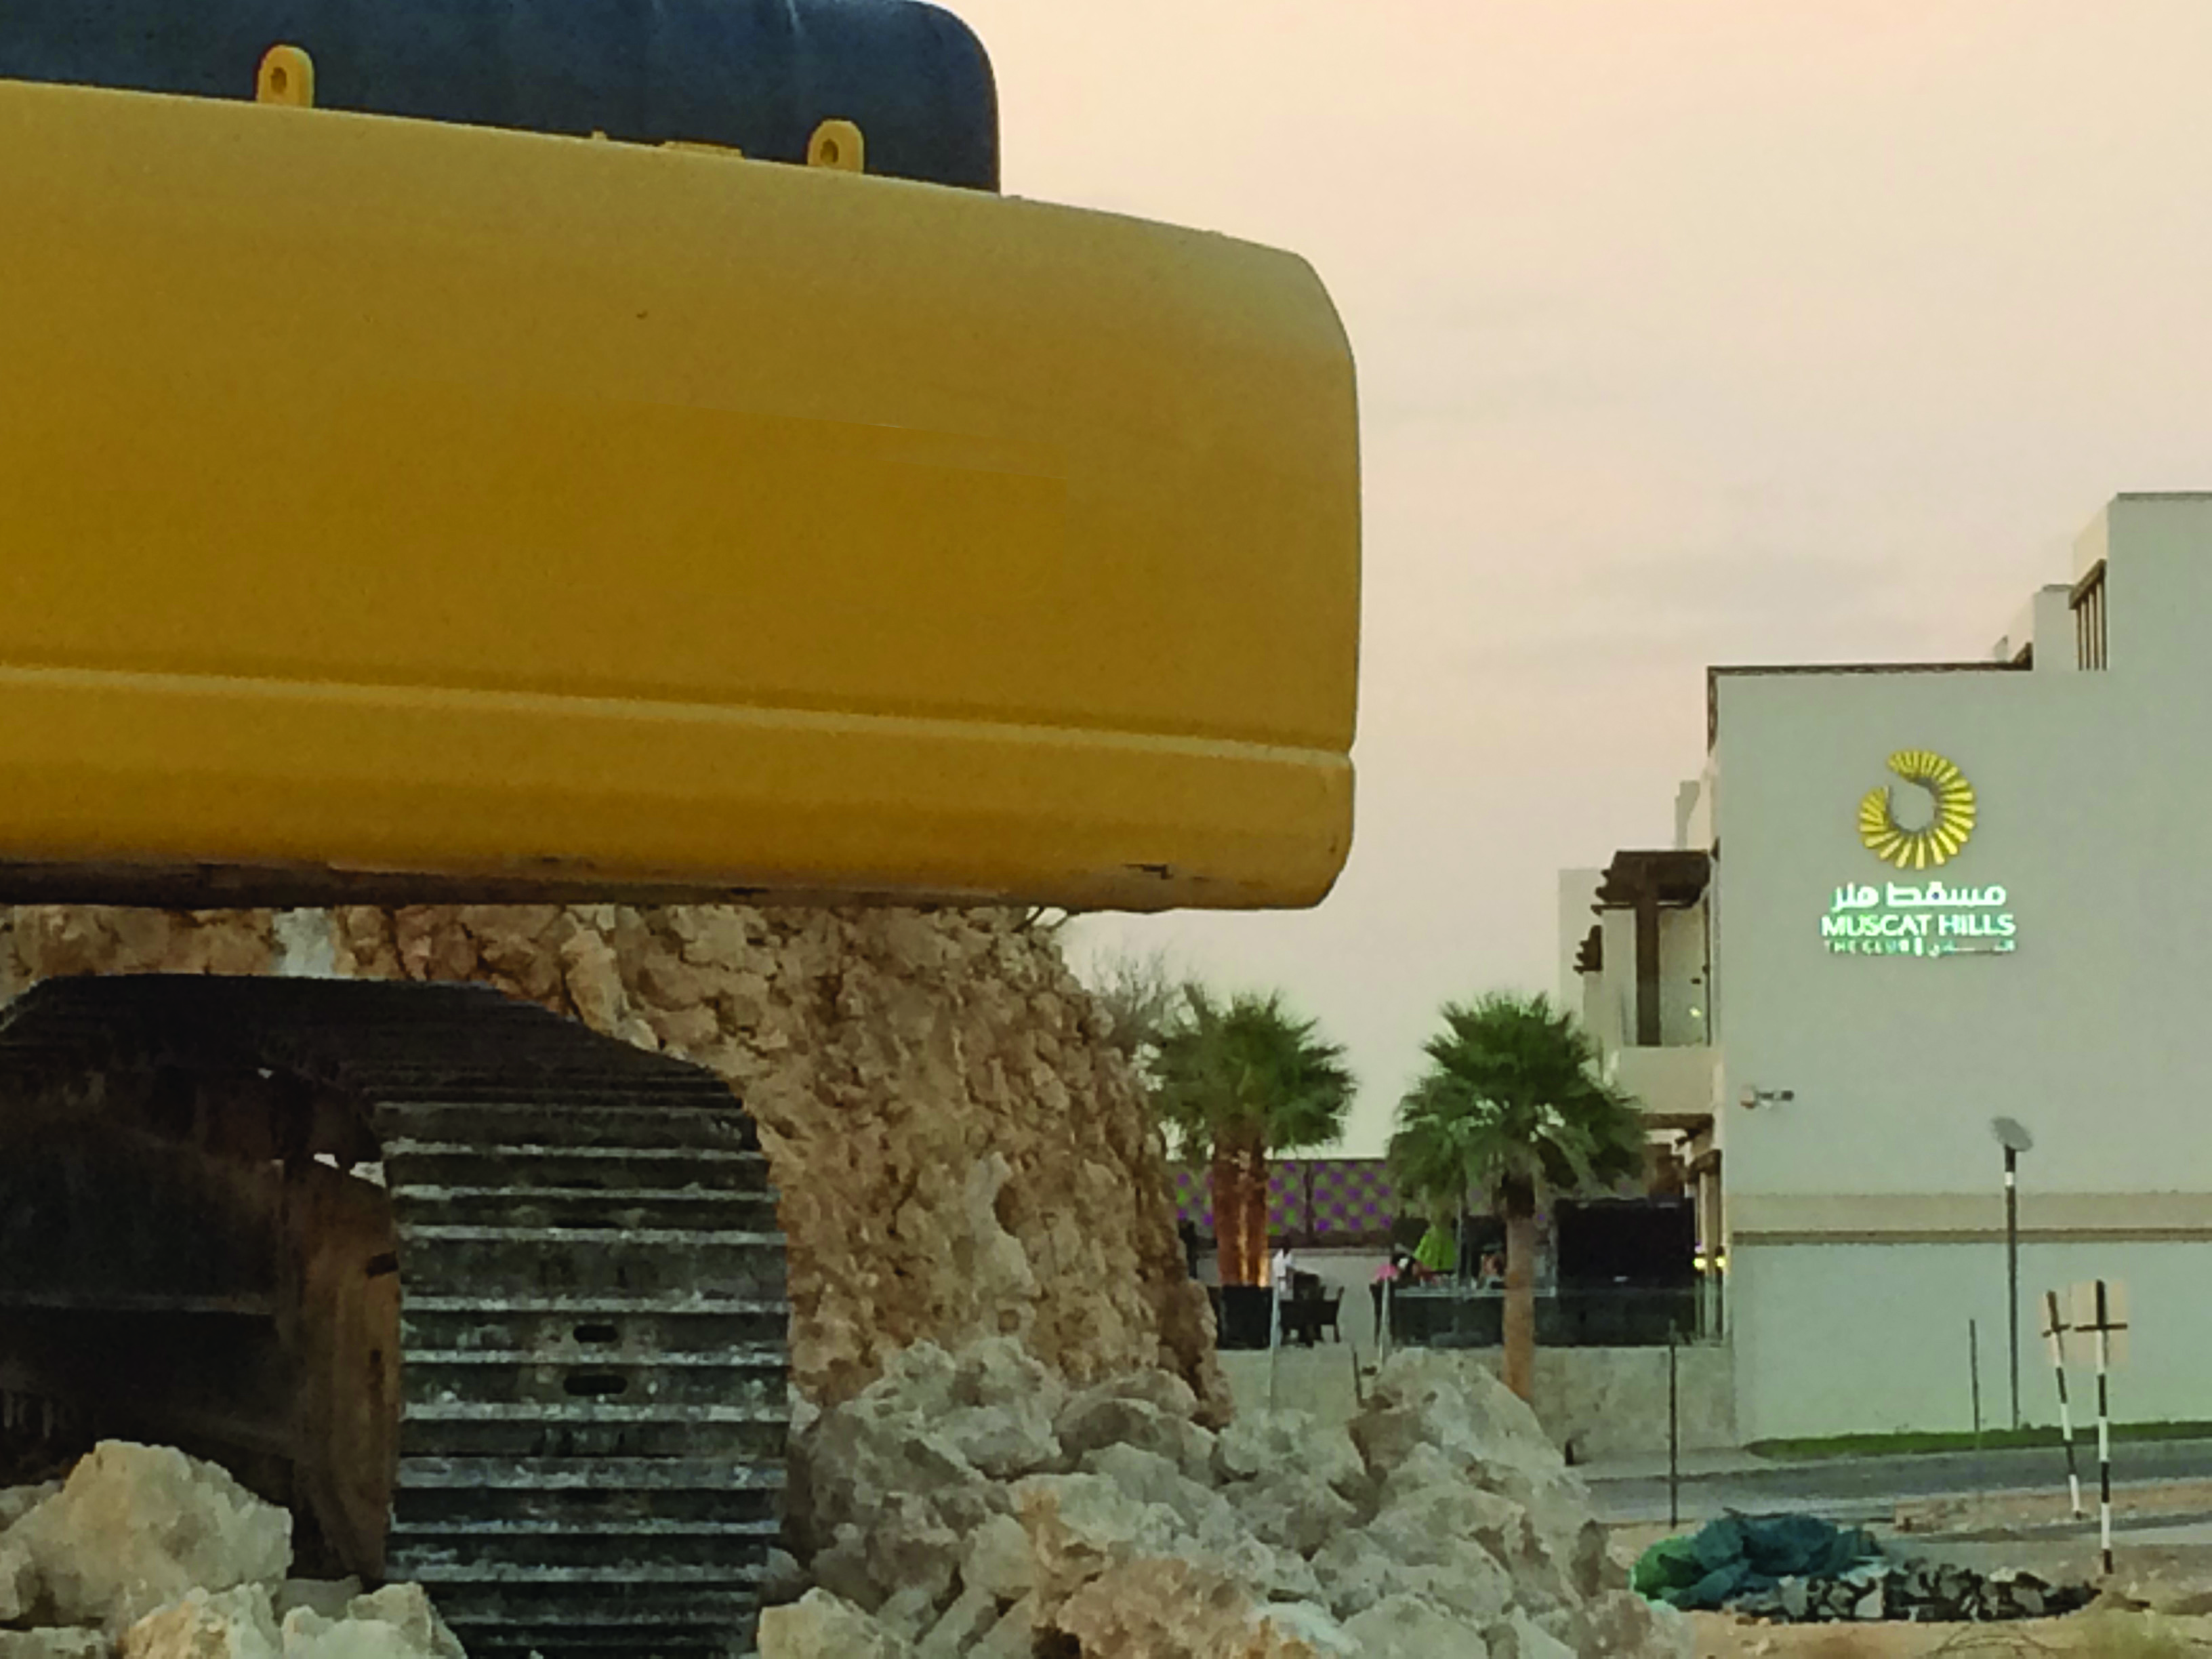 Muscat Hills hotel groundbreaking work begins in Oman